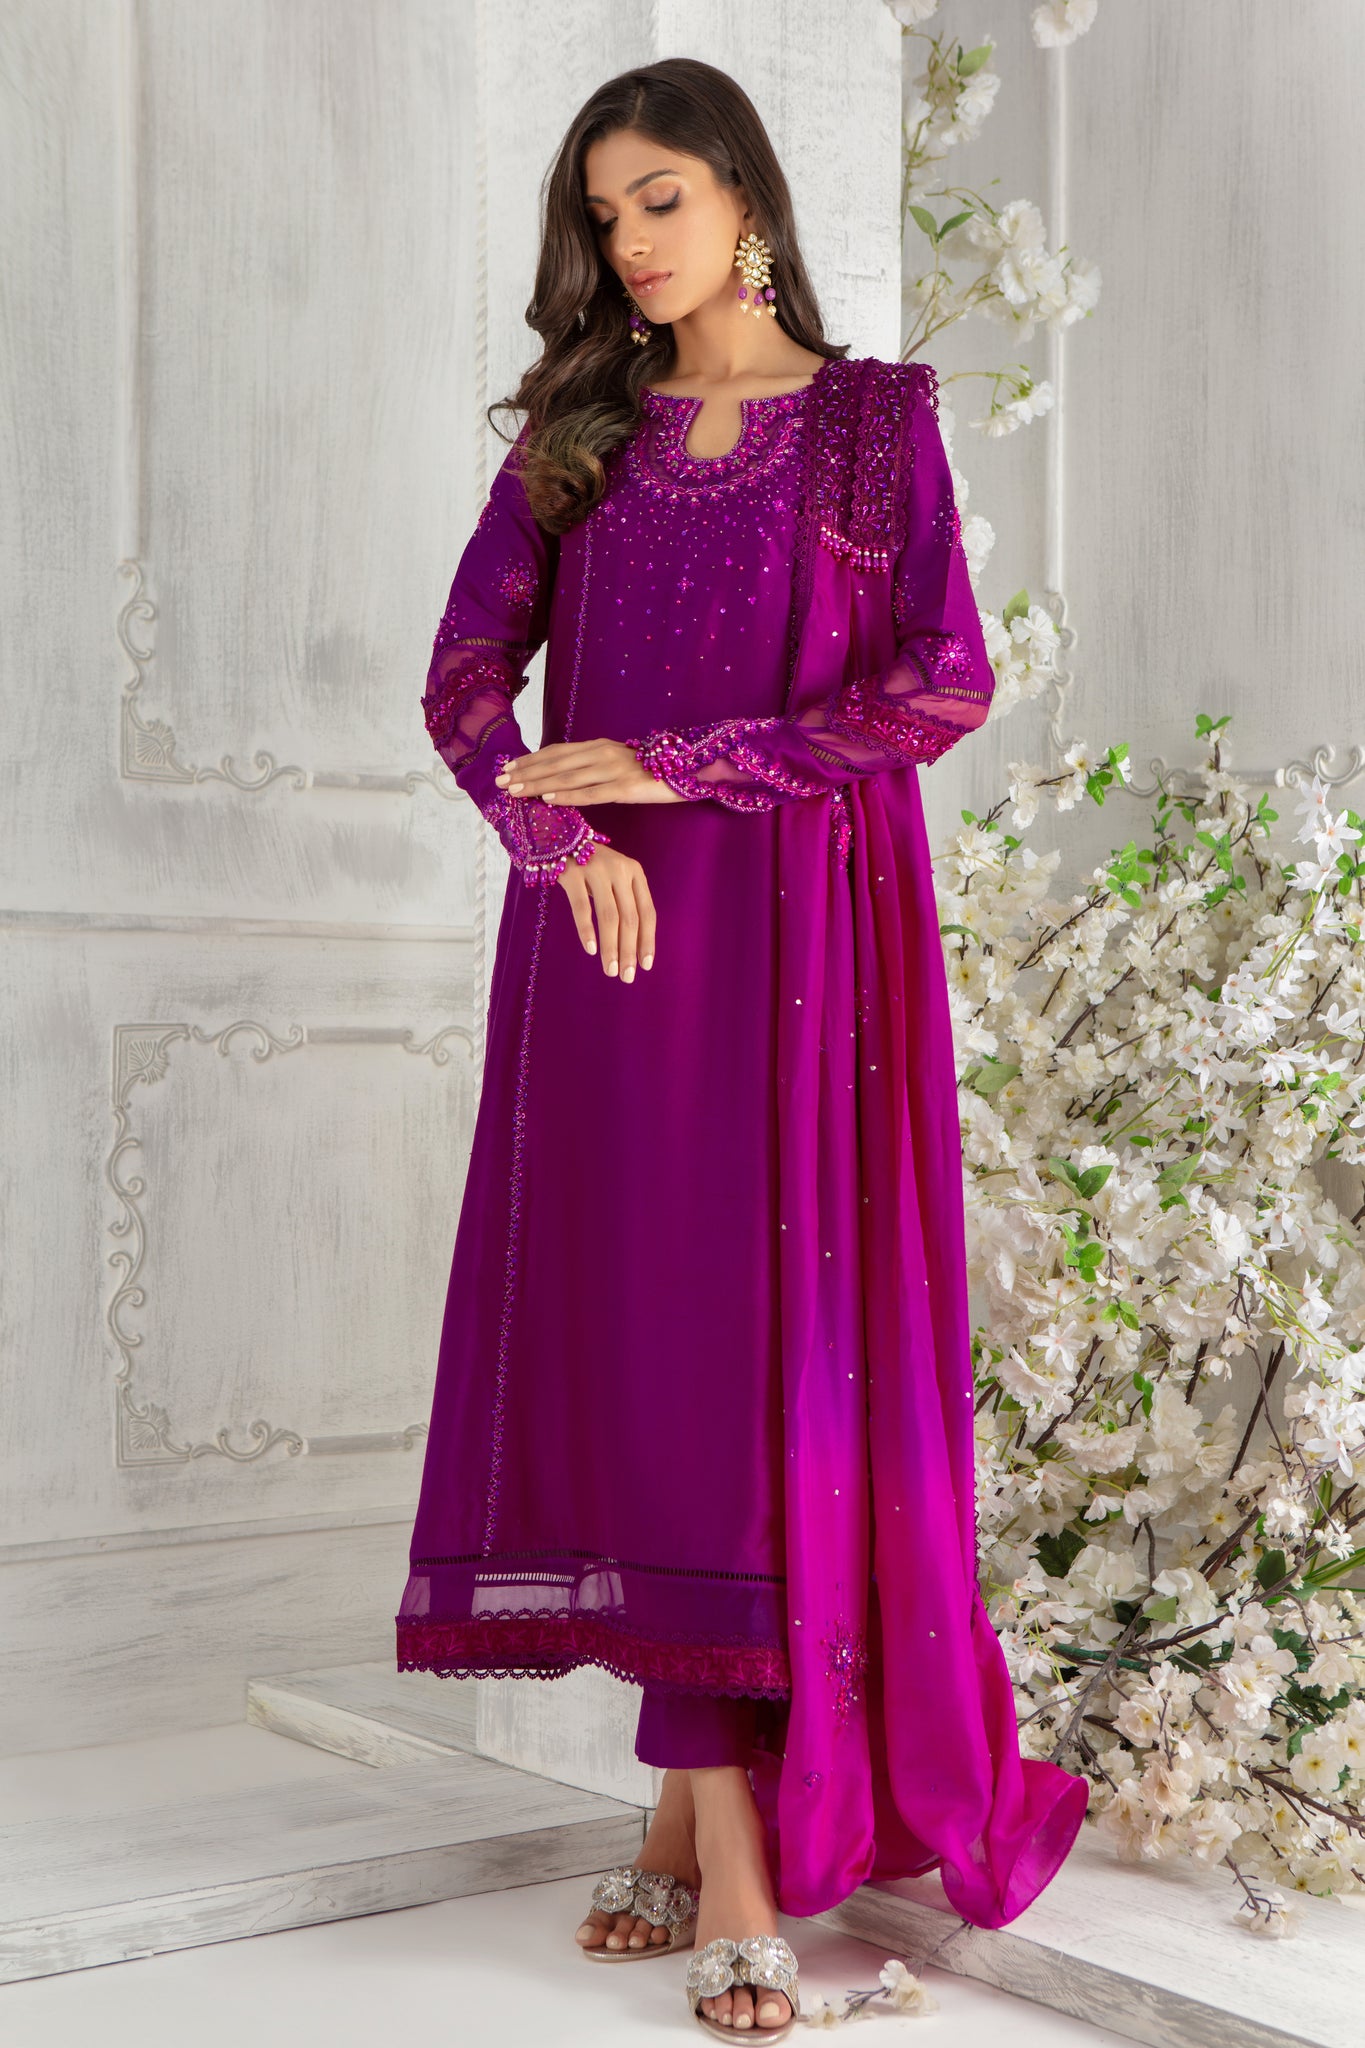 Rosette | Pakistani Designer Outfit | Sarosh Salman